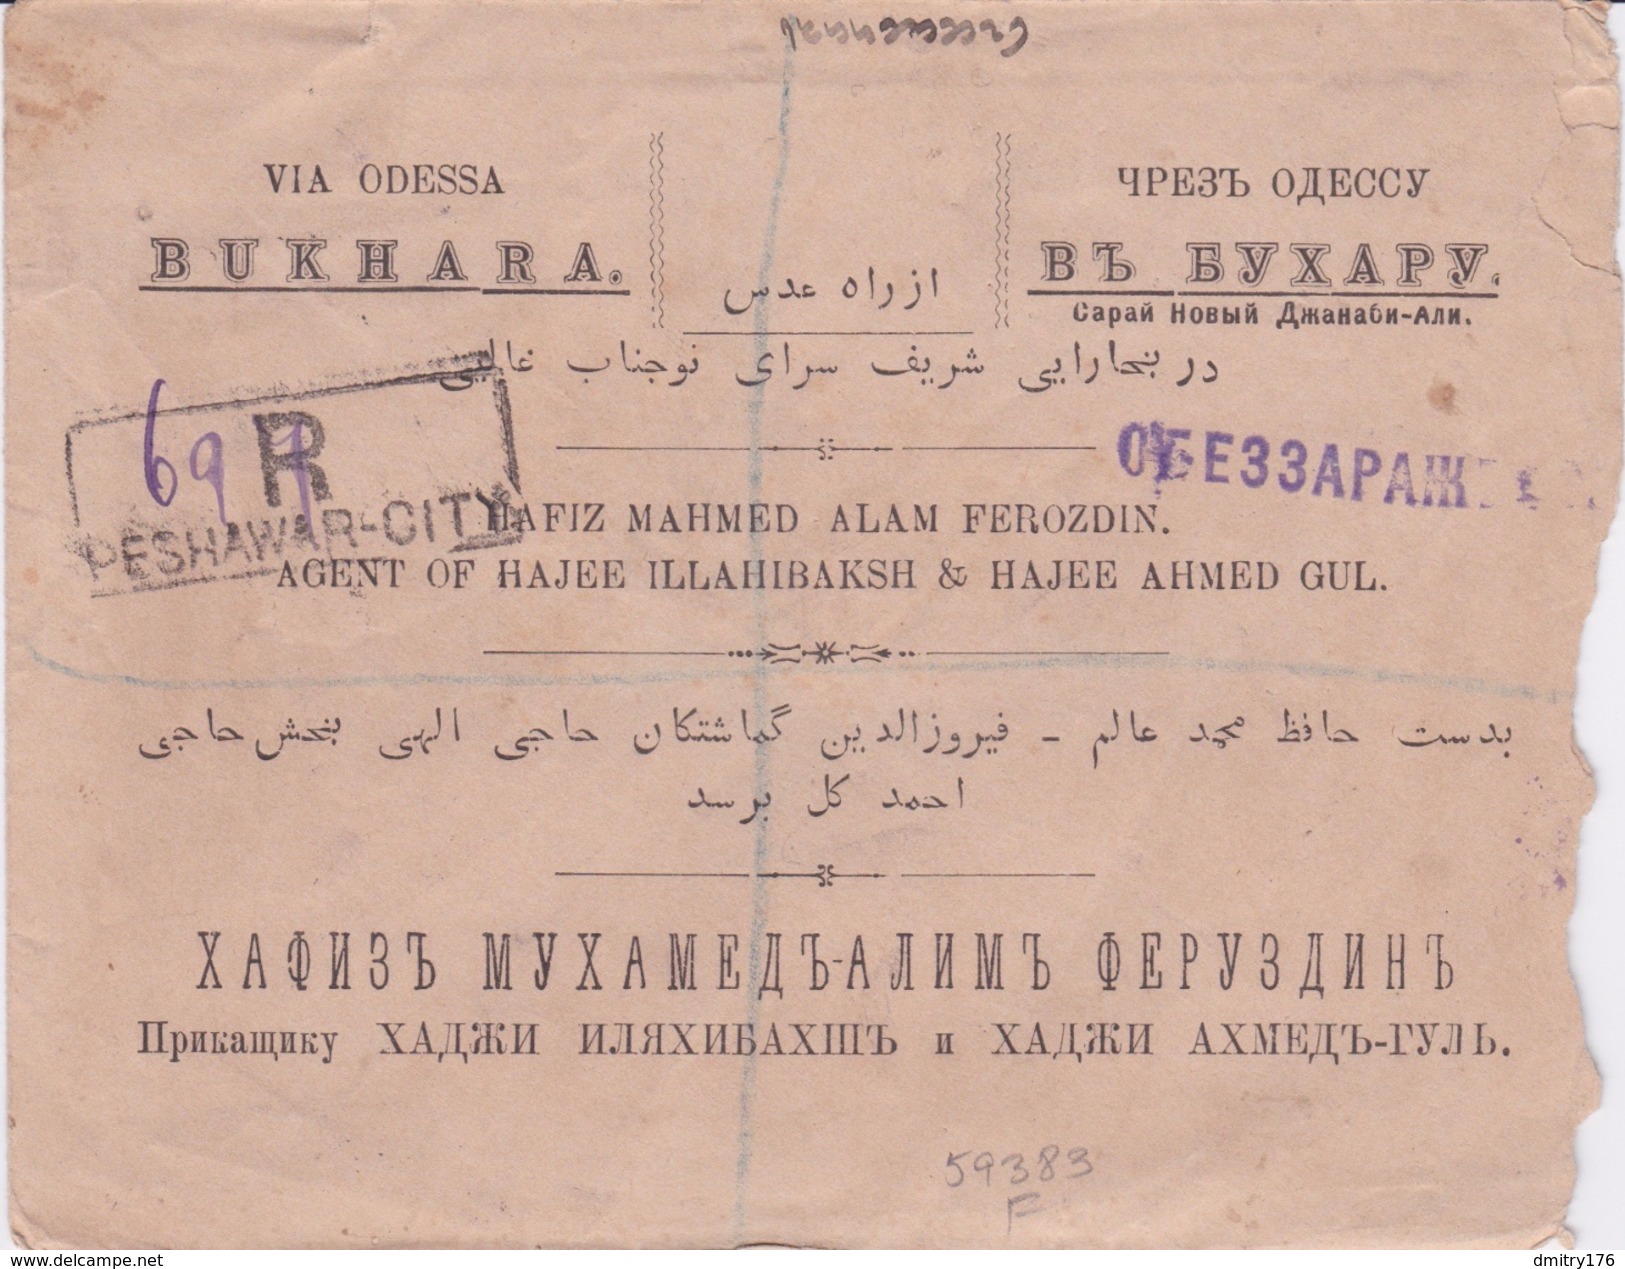 Peshavar Buhara Via Odessa . Disinfected Post Mark In Odessa Katalog Mandrovsky 400$ - Briefe U. Dokumente